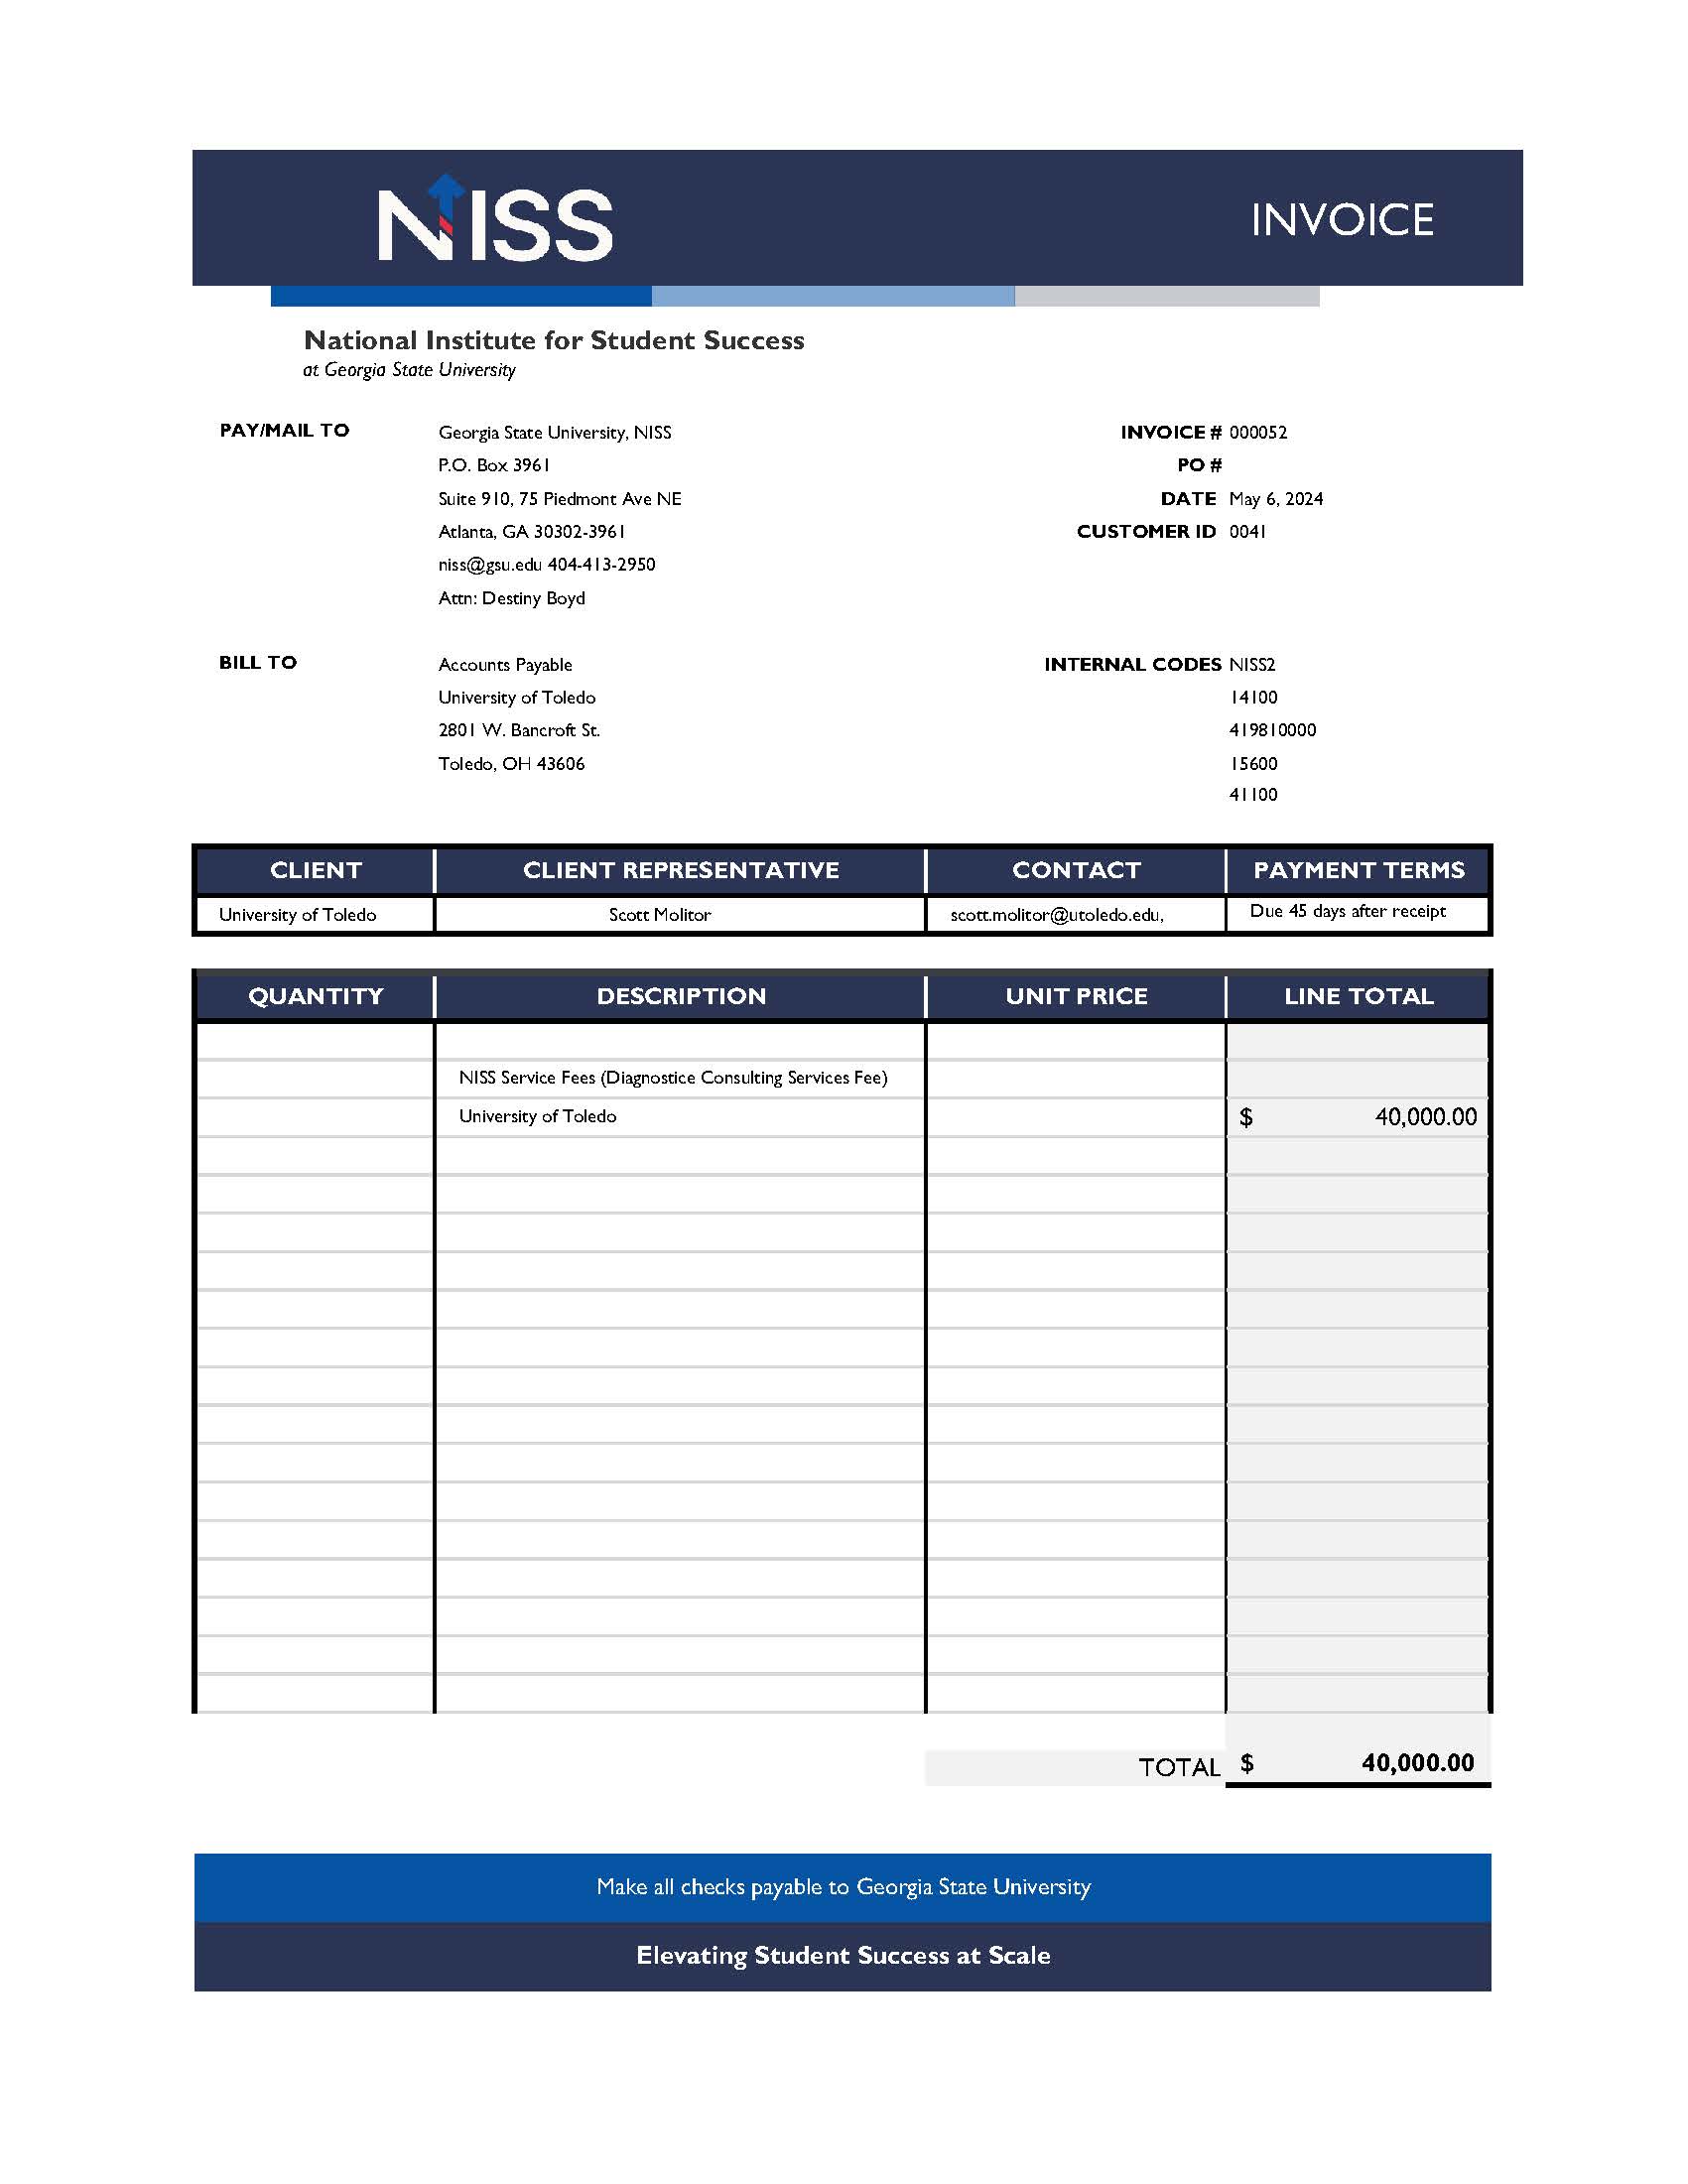 NISS Diagnostic & Playbook: University of Toledo 